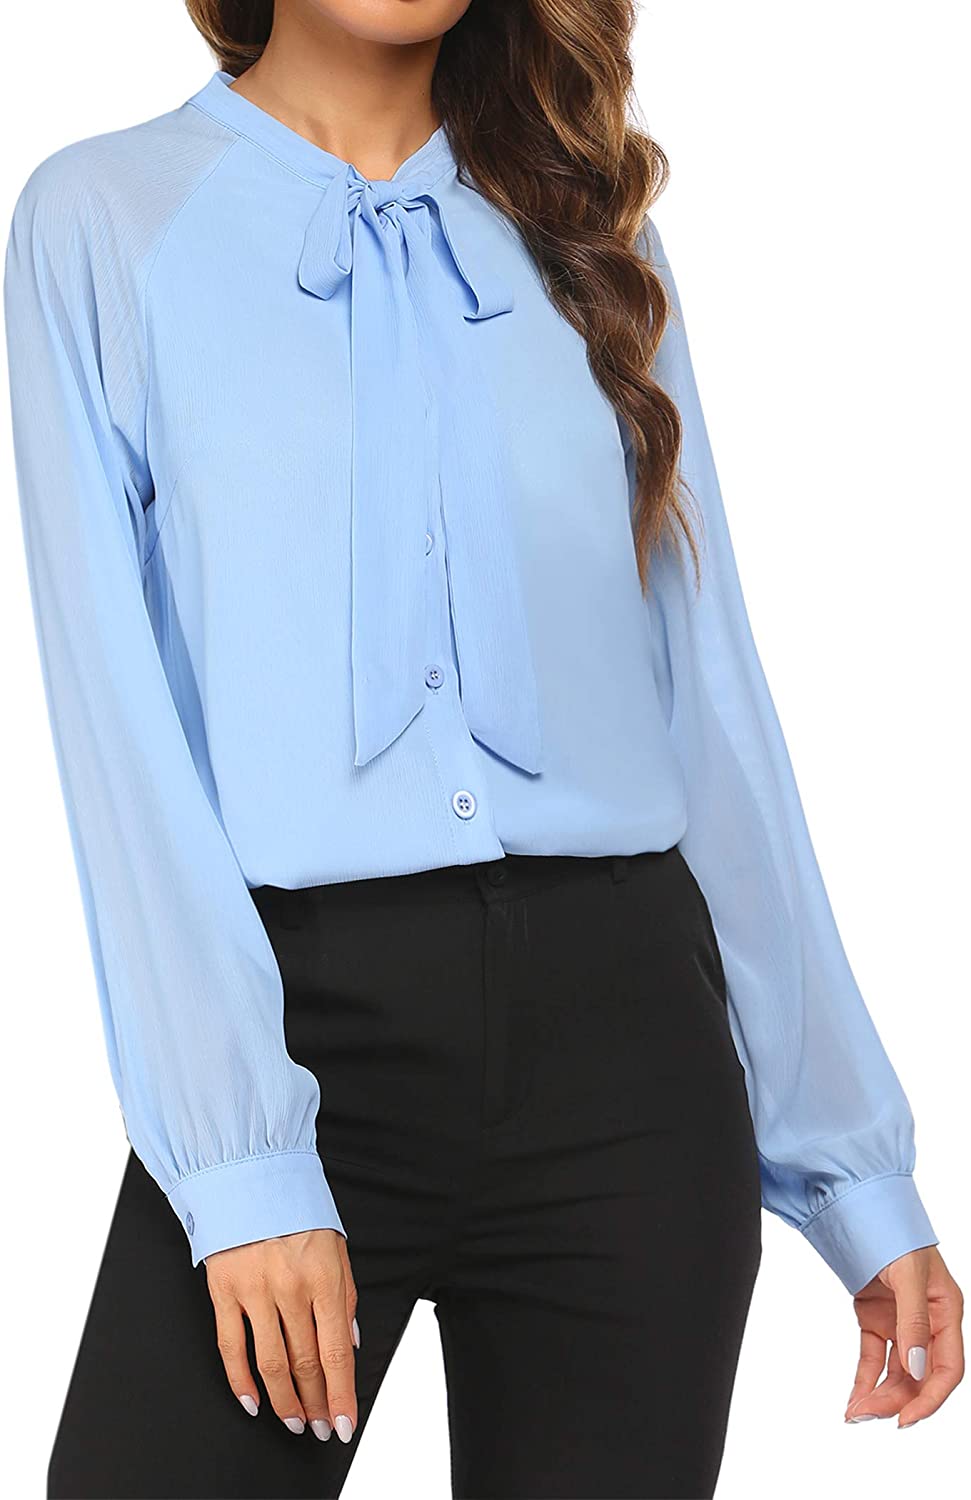 ACEVOG Women Bow Tie Neck Blouses Casual Tops Long Sleeve Button Shirts  XS-XXL